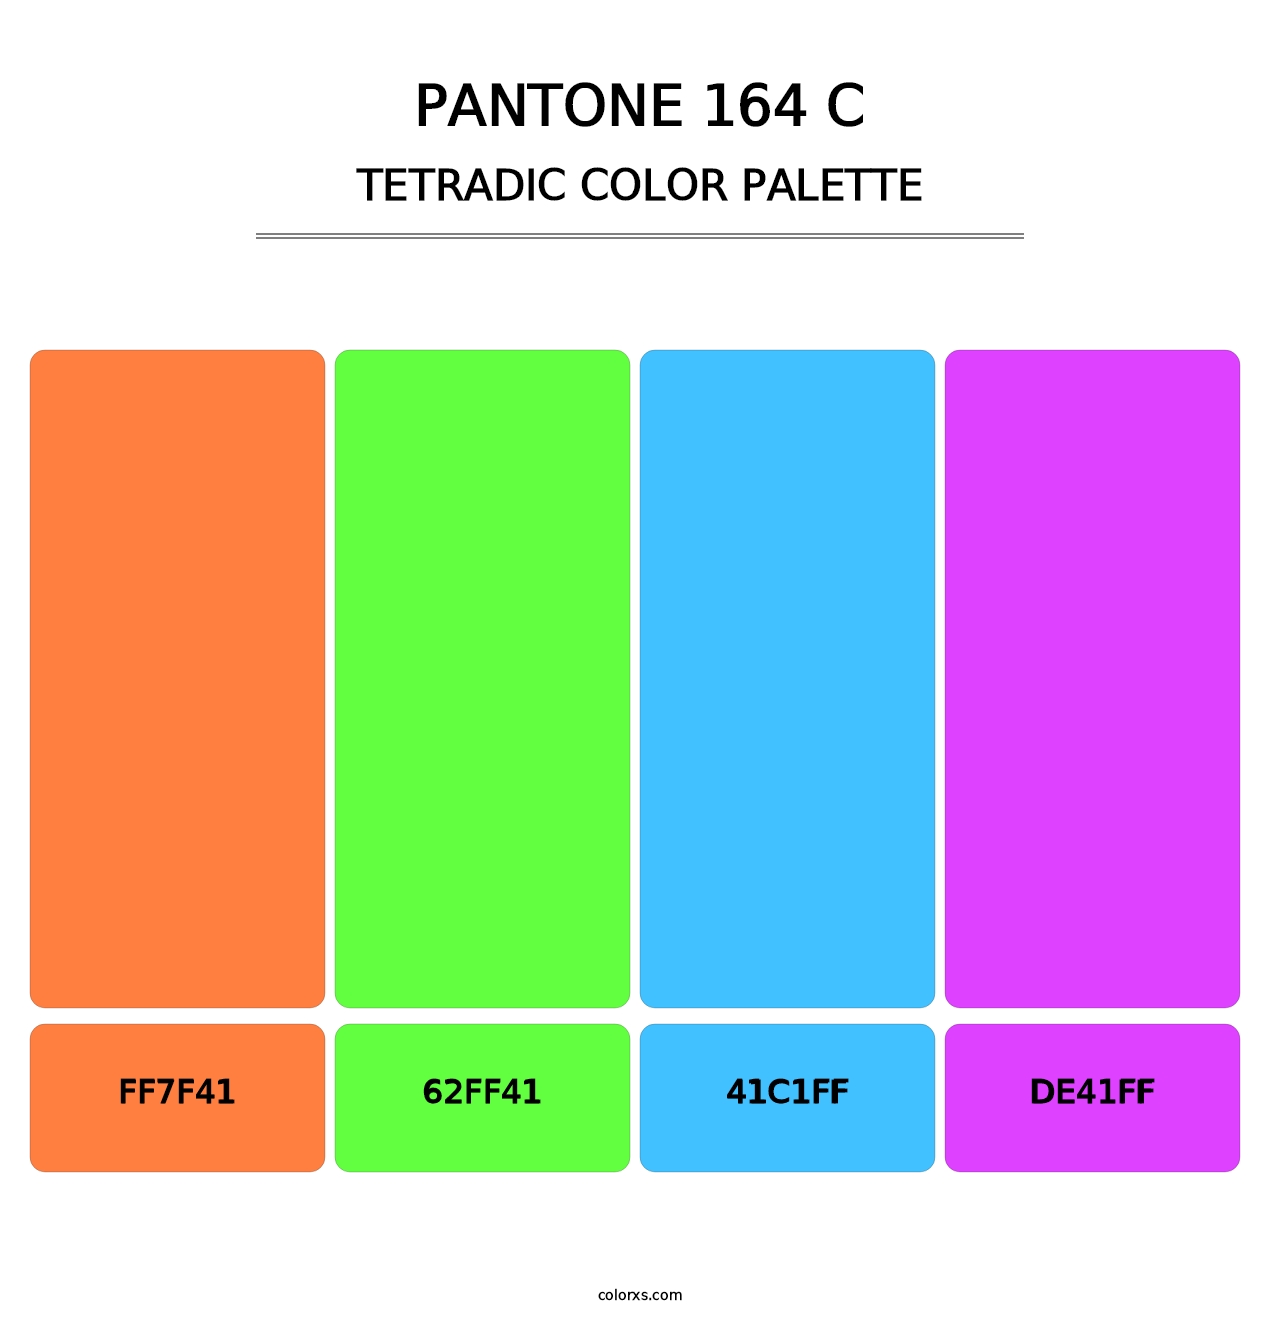 PANTONE 164 C - Tetradic Color Palette